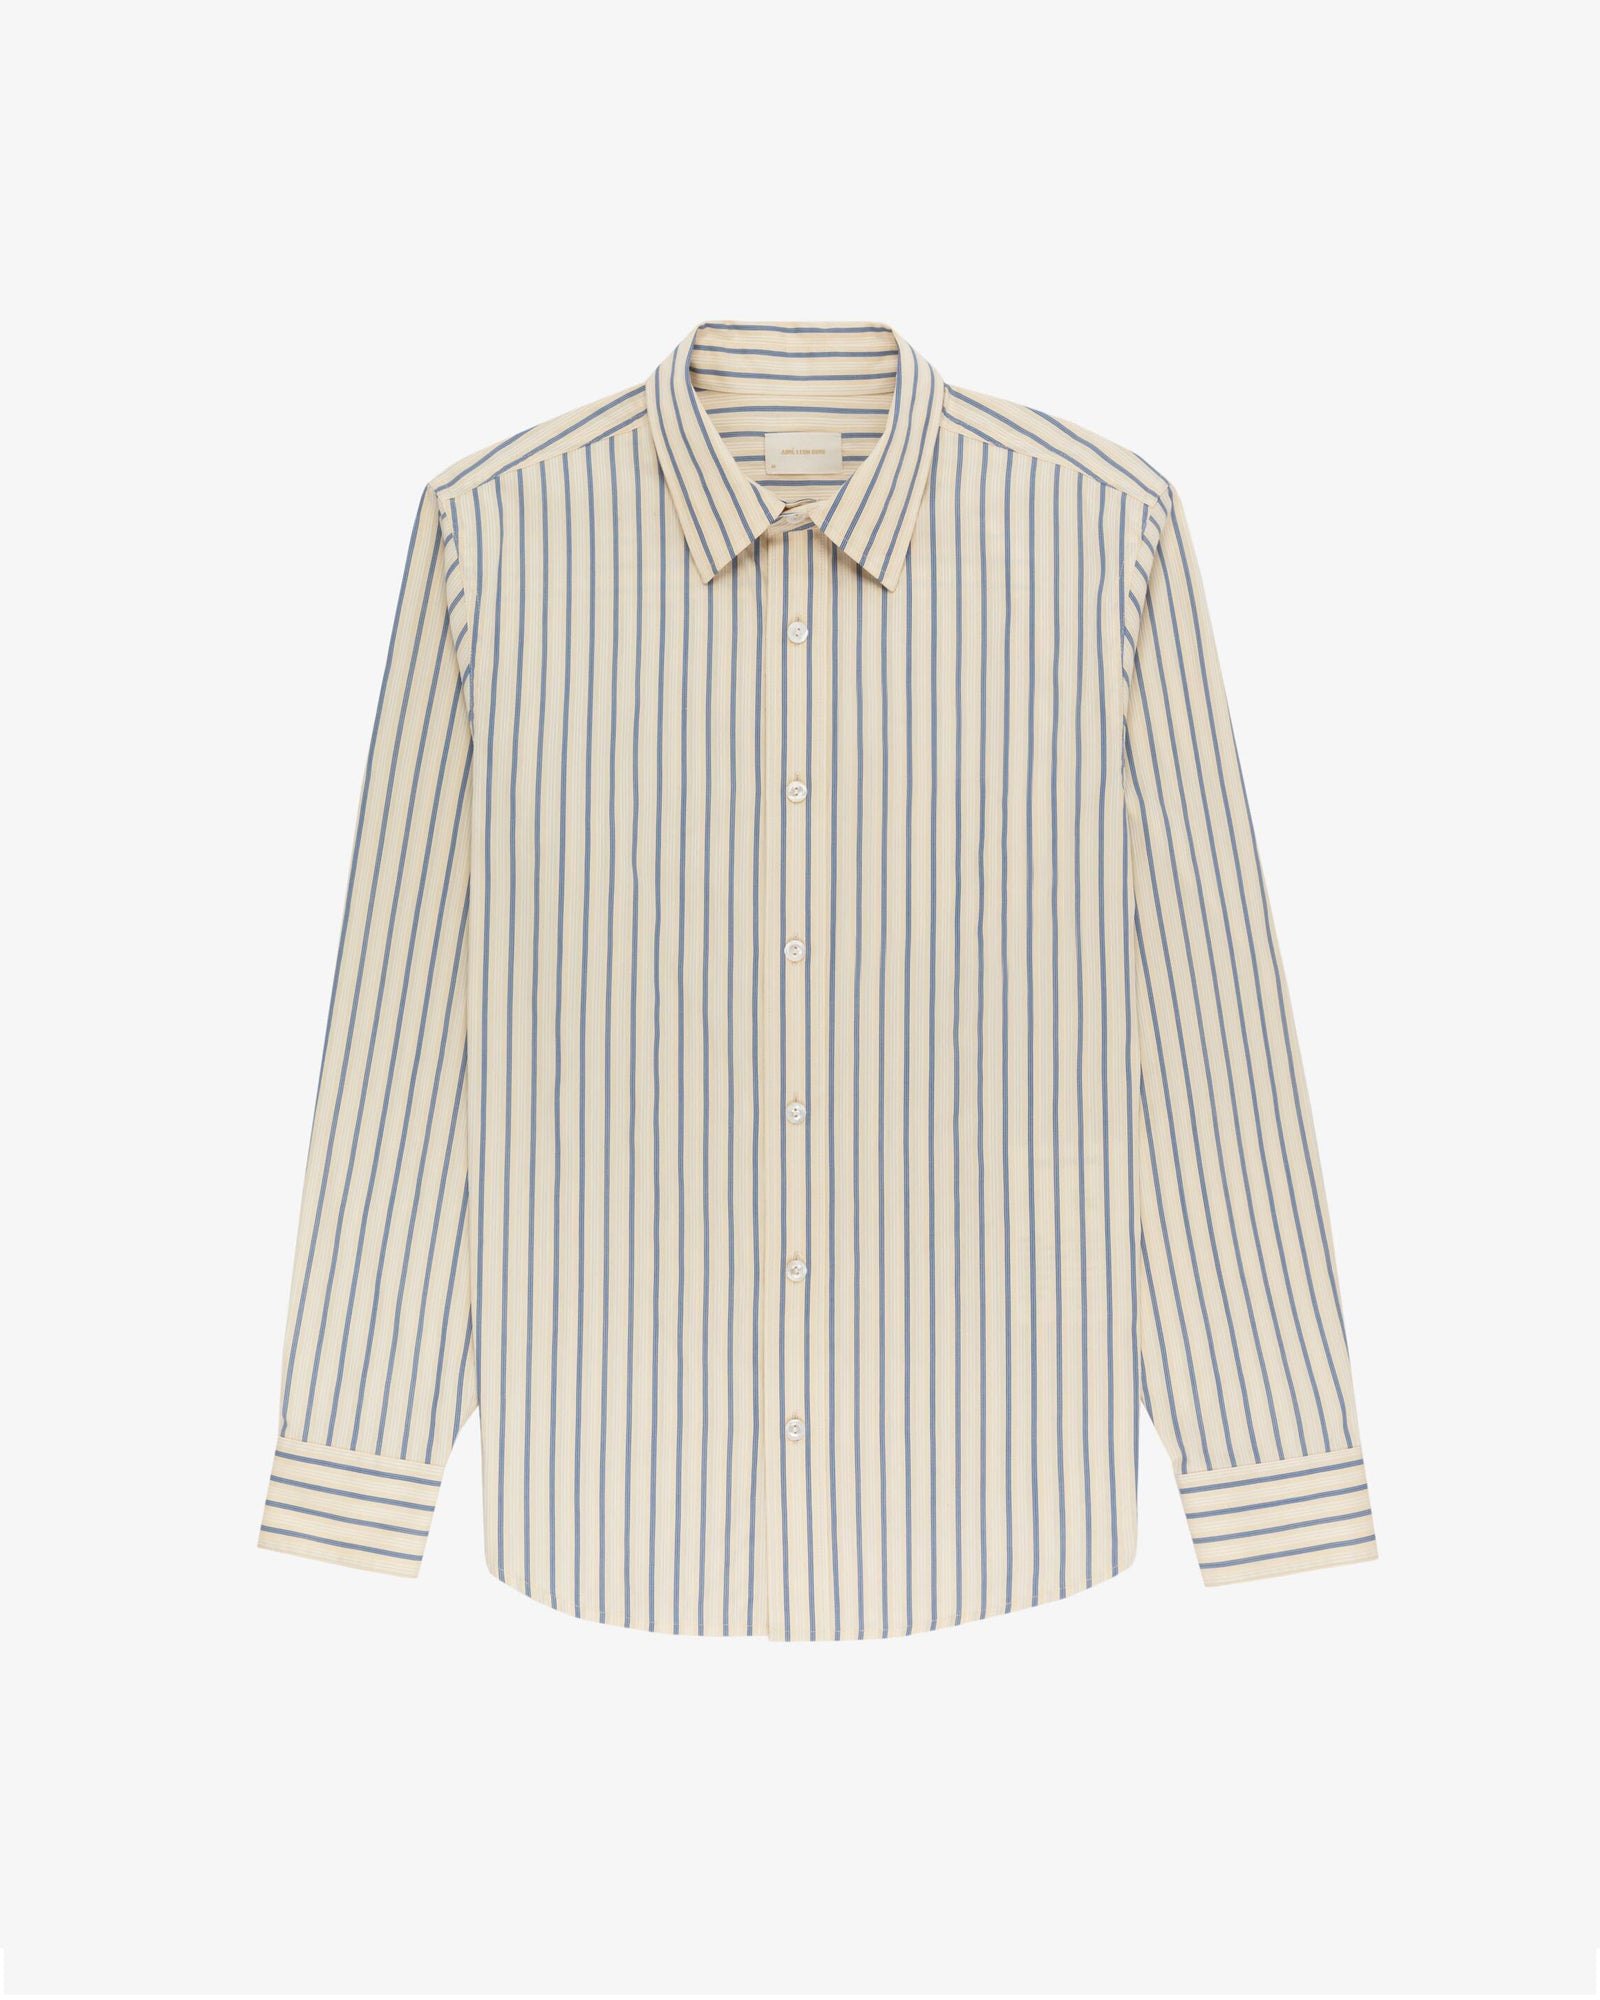 Jacquard Stripe Shirt